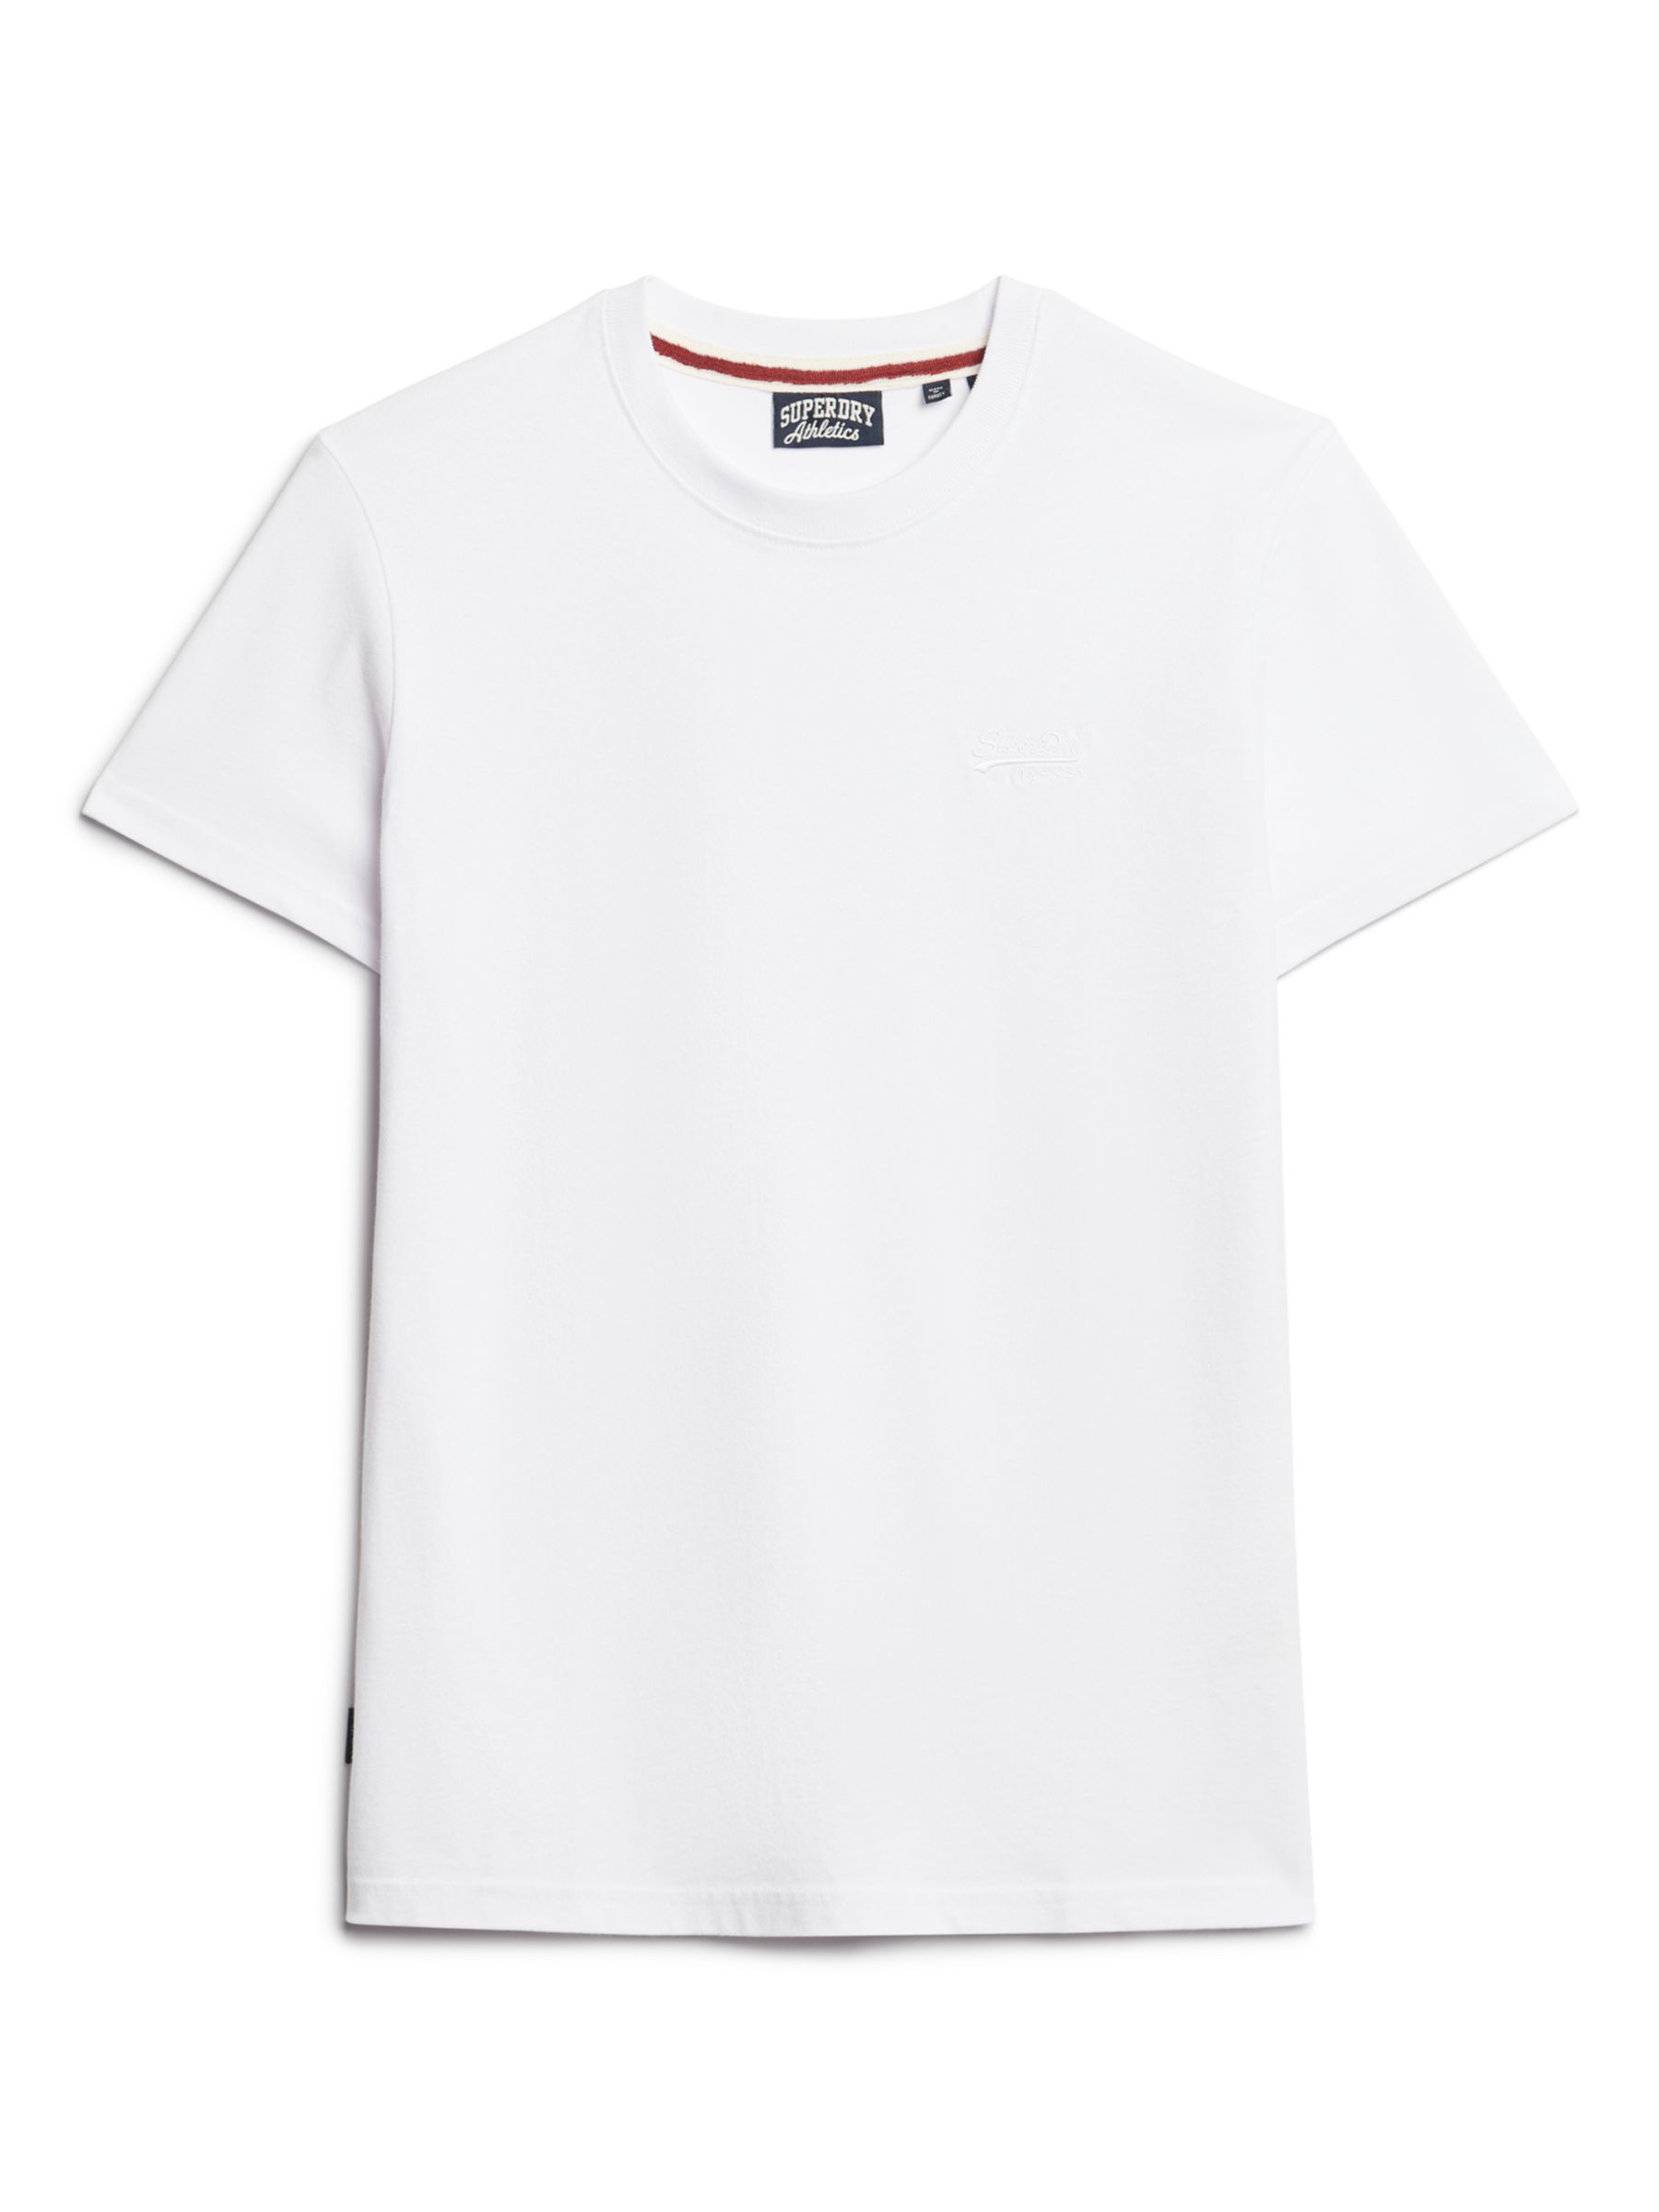 Organic Cotton Essential Logo T-Shirt - Superdry